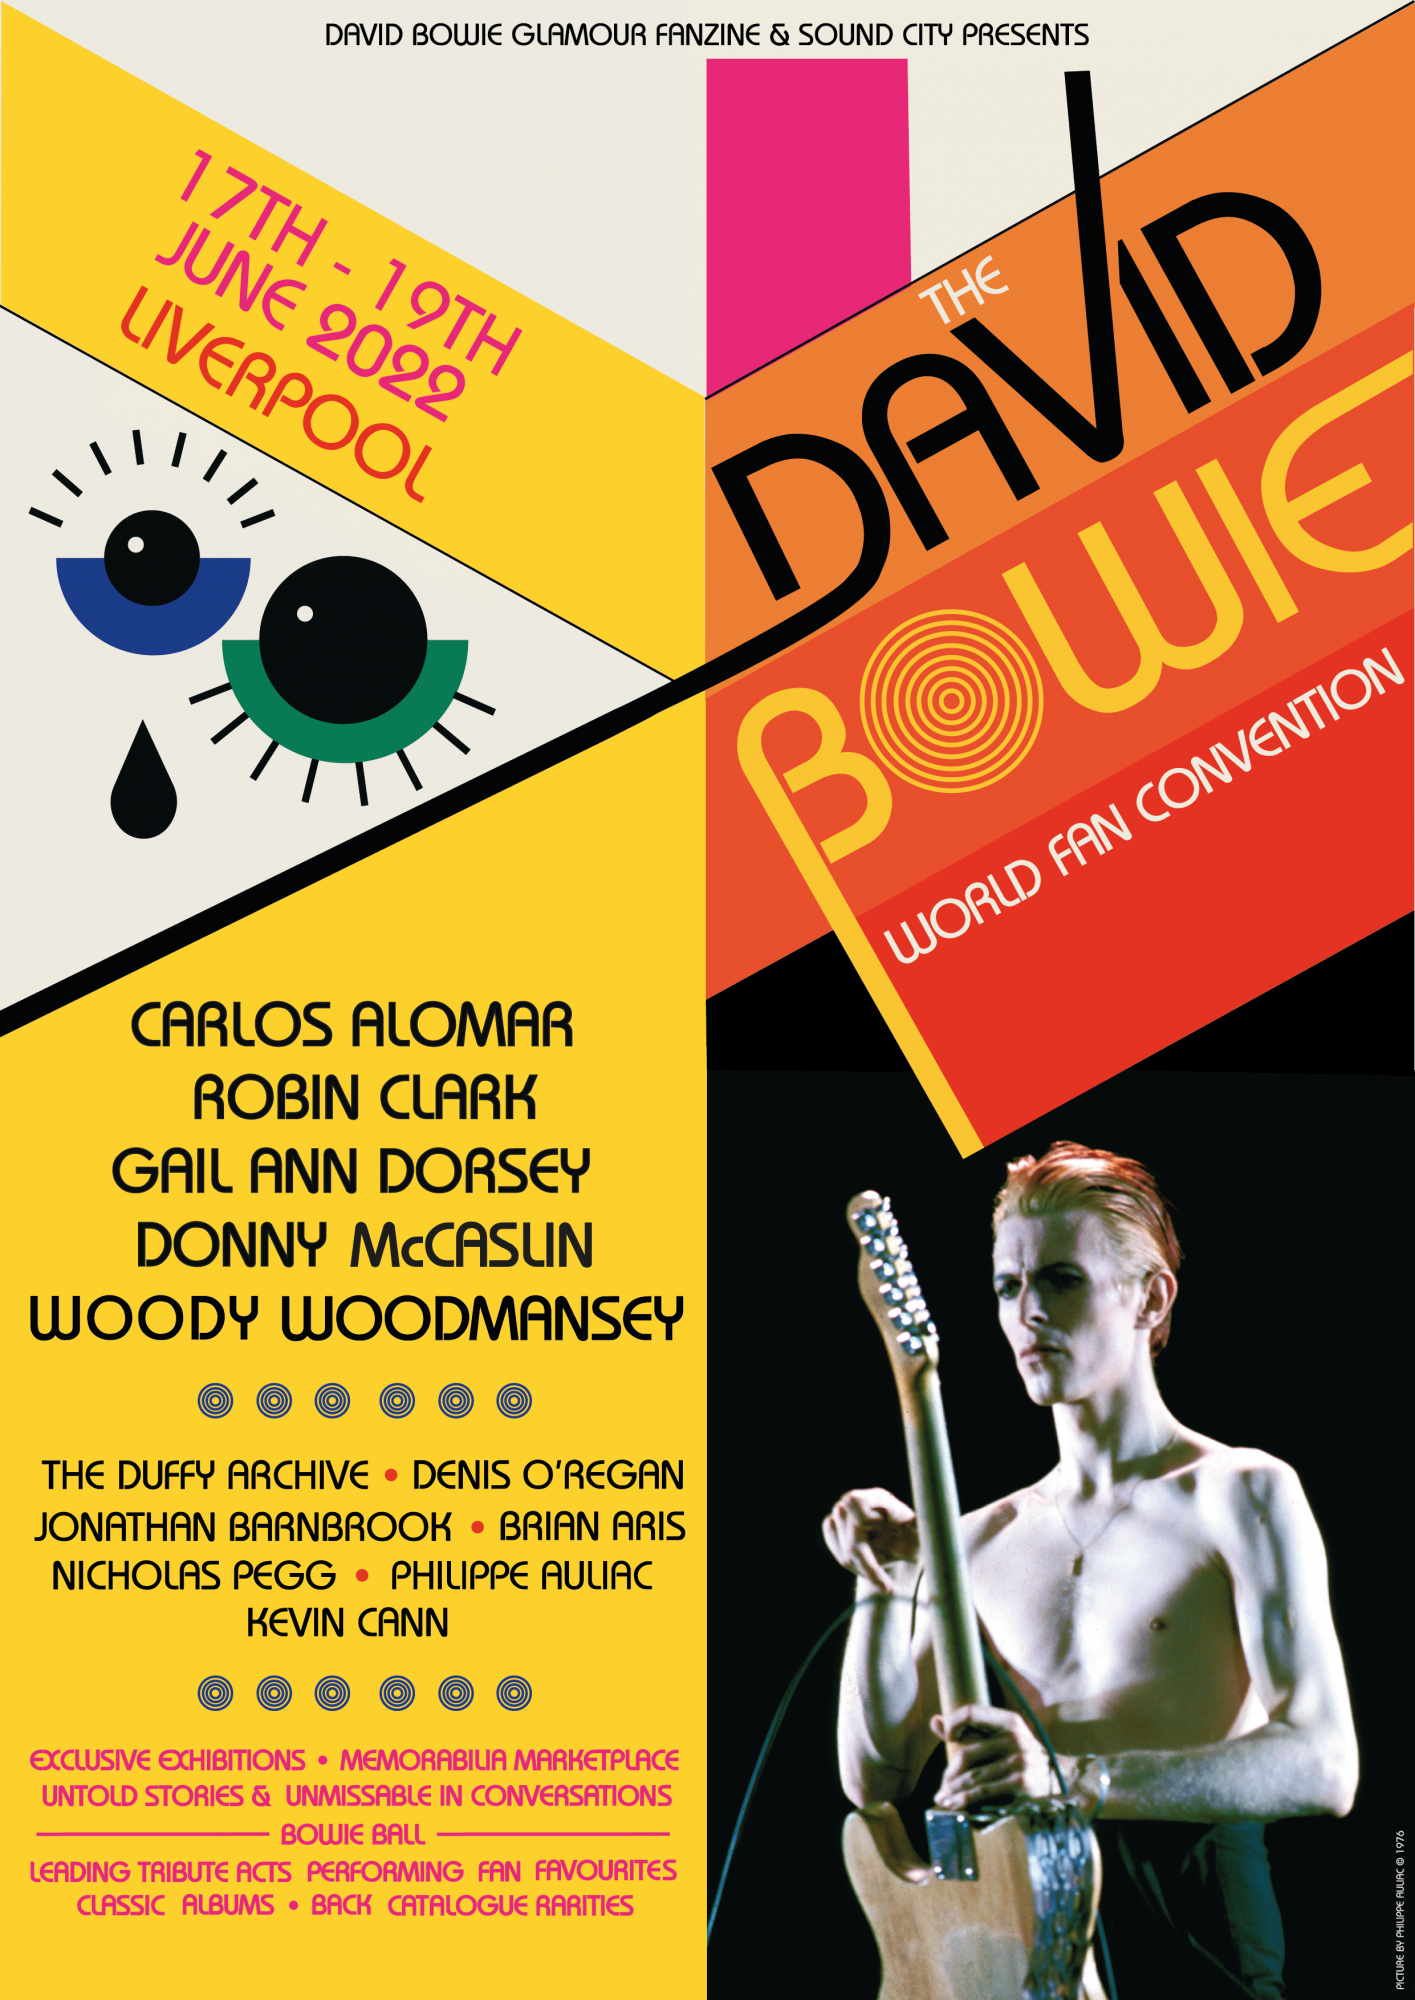 Sound City Presents: David Bowie World Fan Convention